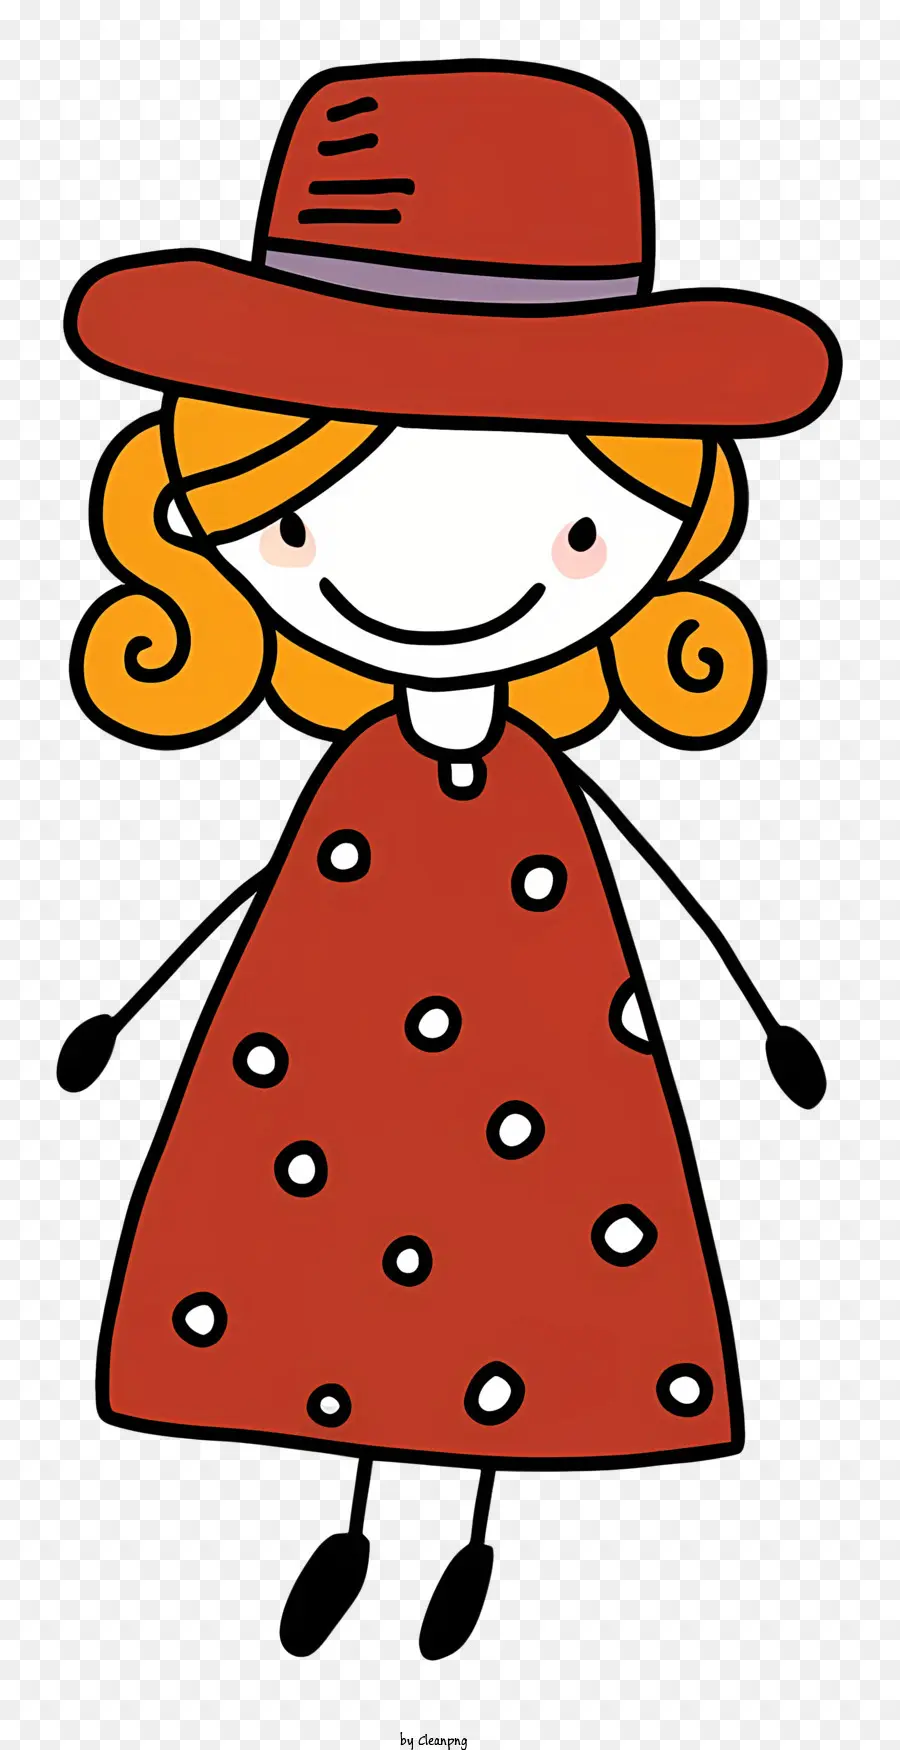 cartoon girl red dress polka dots red hat white polka dots